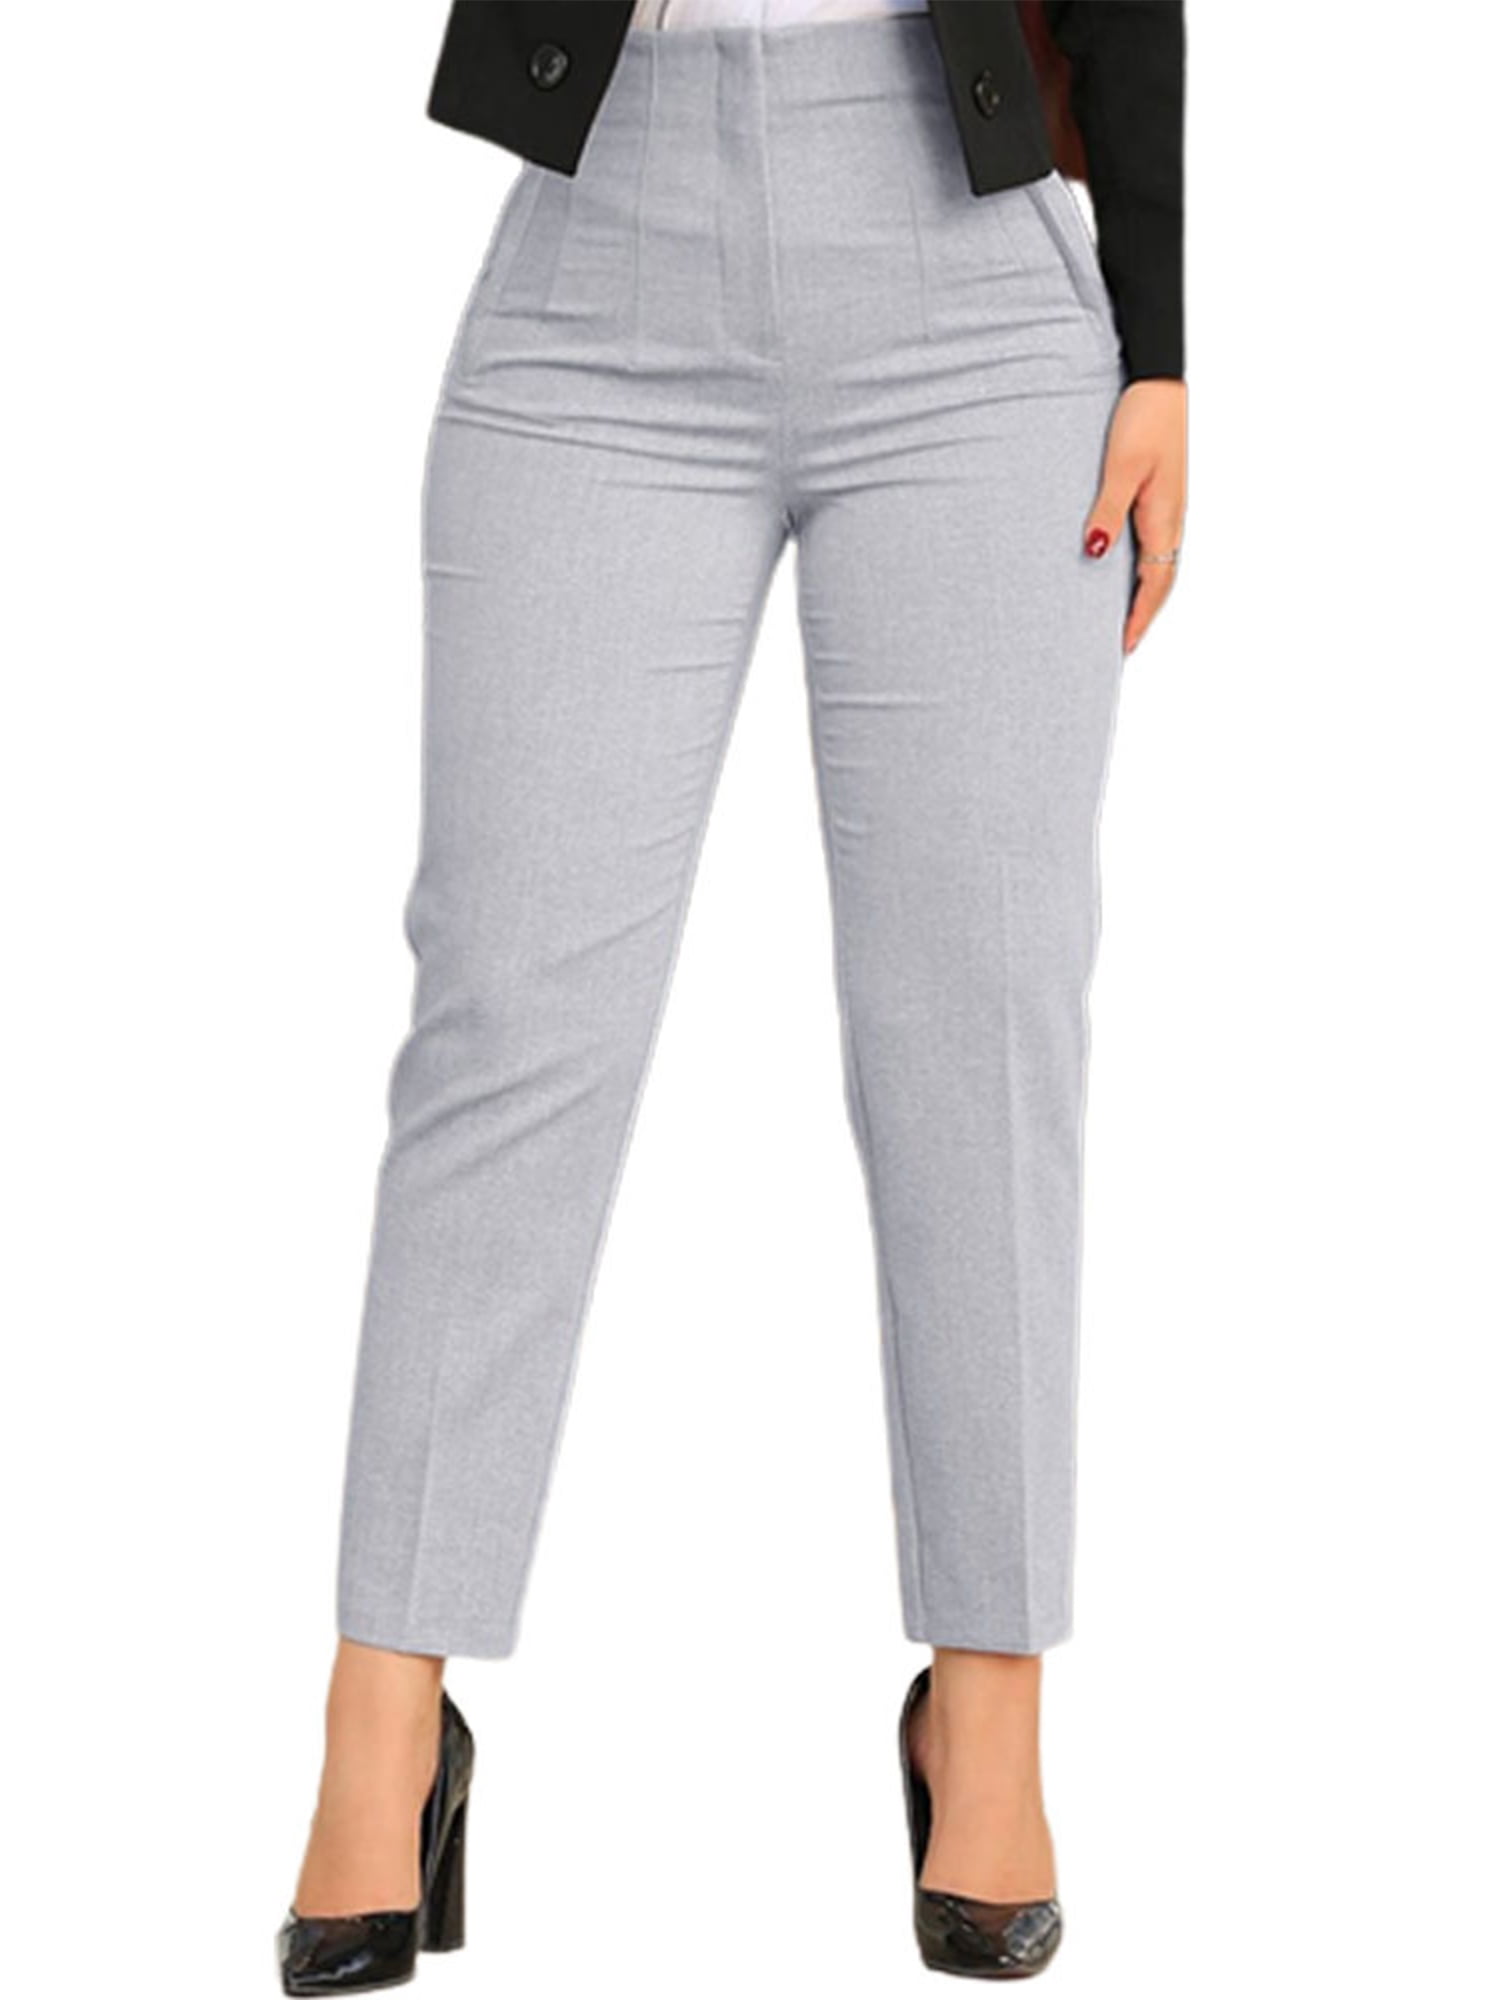 AFITNE Women's Dress Pants Straight Leg Stretchy Yoga Work Pants Business  Office Casual Slacks with Zipper Pockets, Mix Grey, S price in Saudi Arabia,  Saudi Arabia